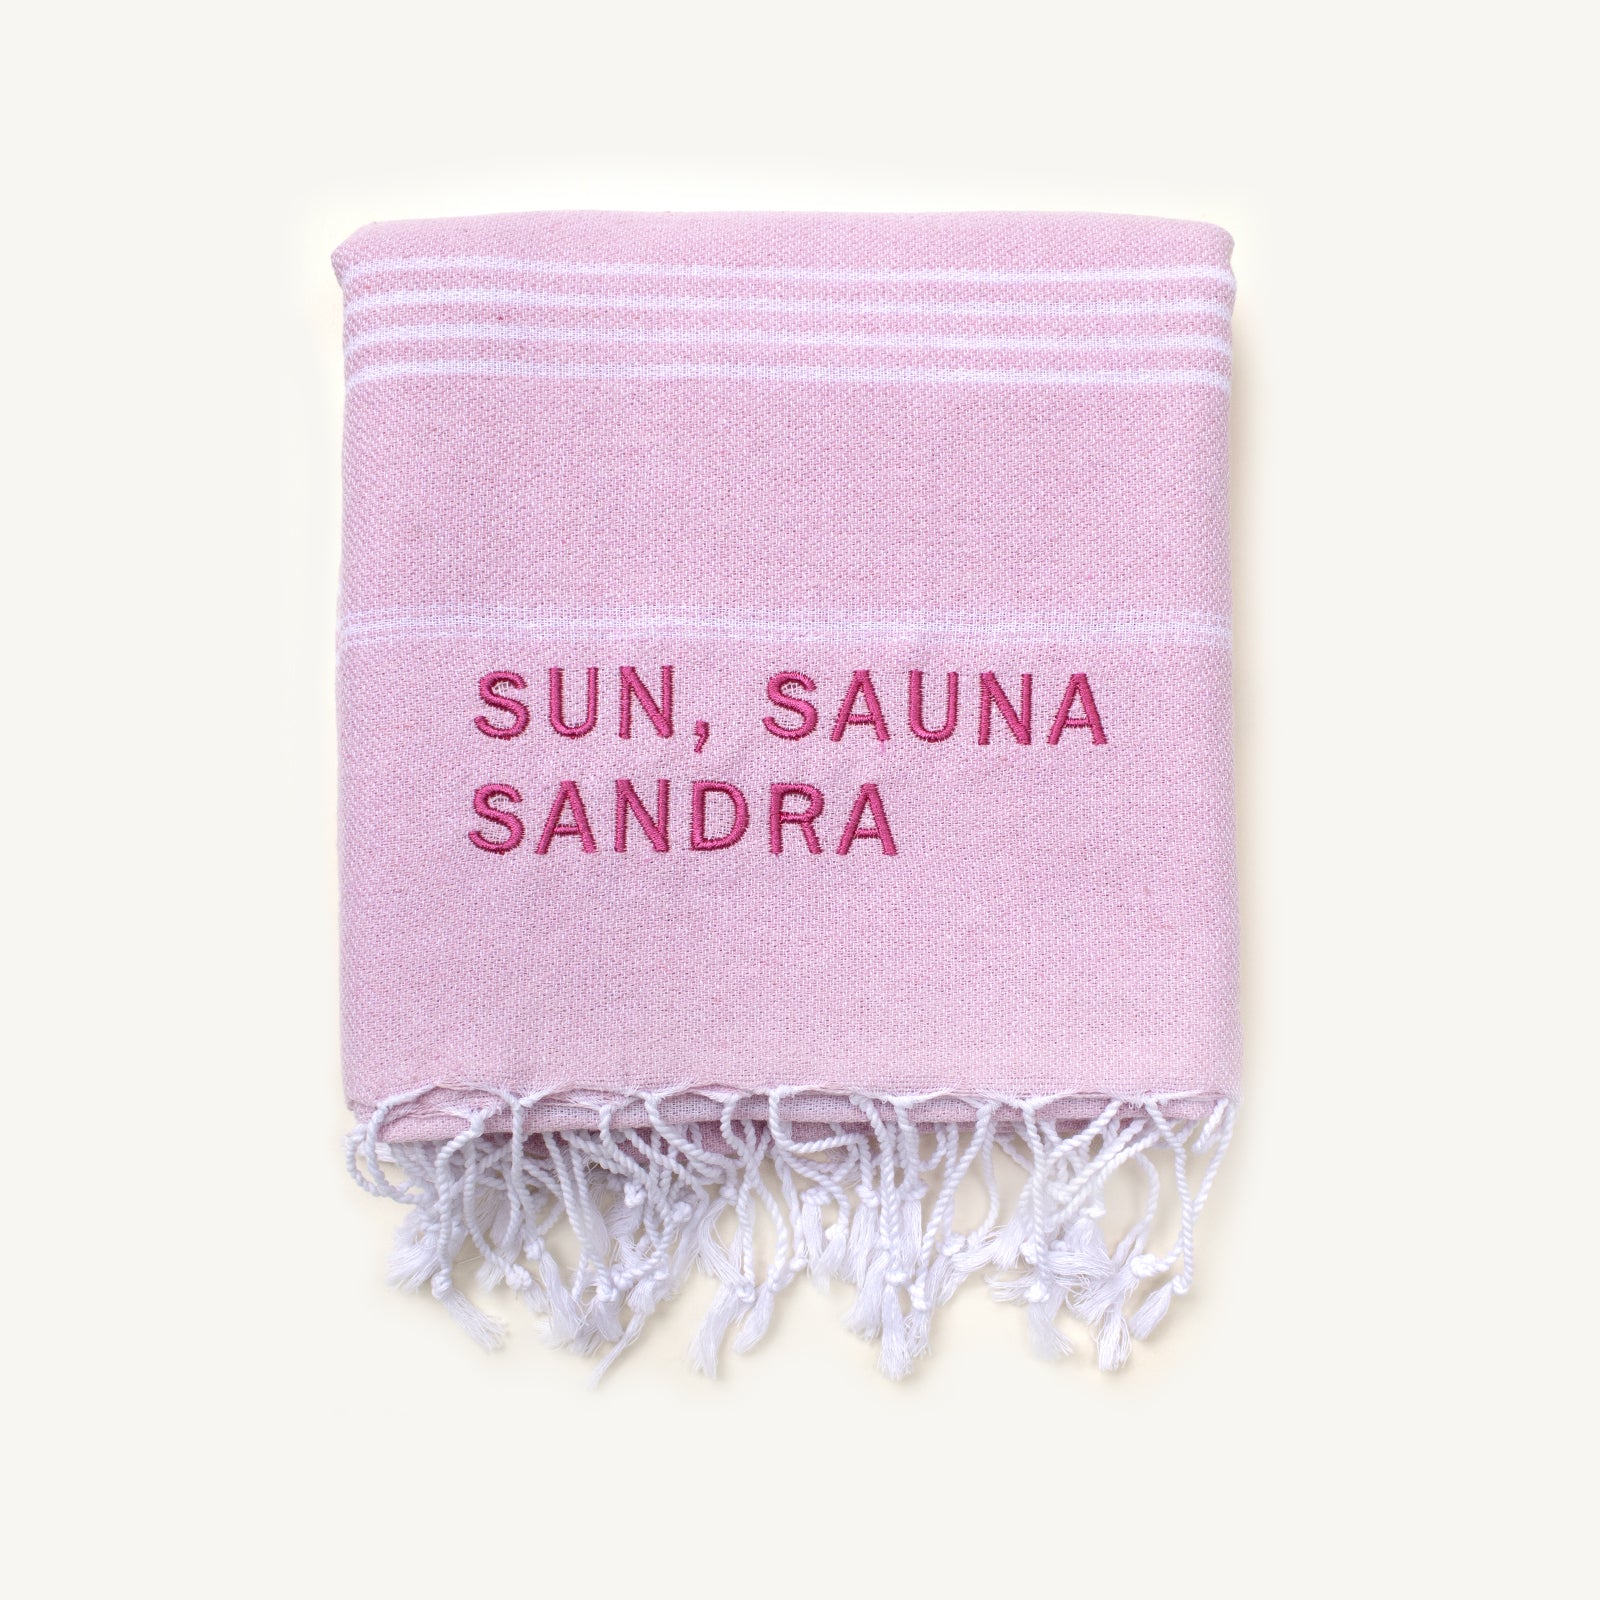 "SUN, SAUNA, SANDRA" Embroidered Turkish Towel